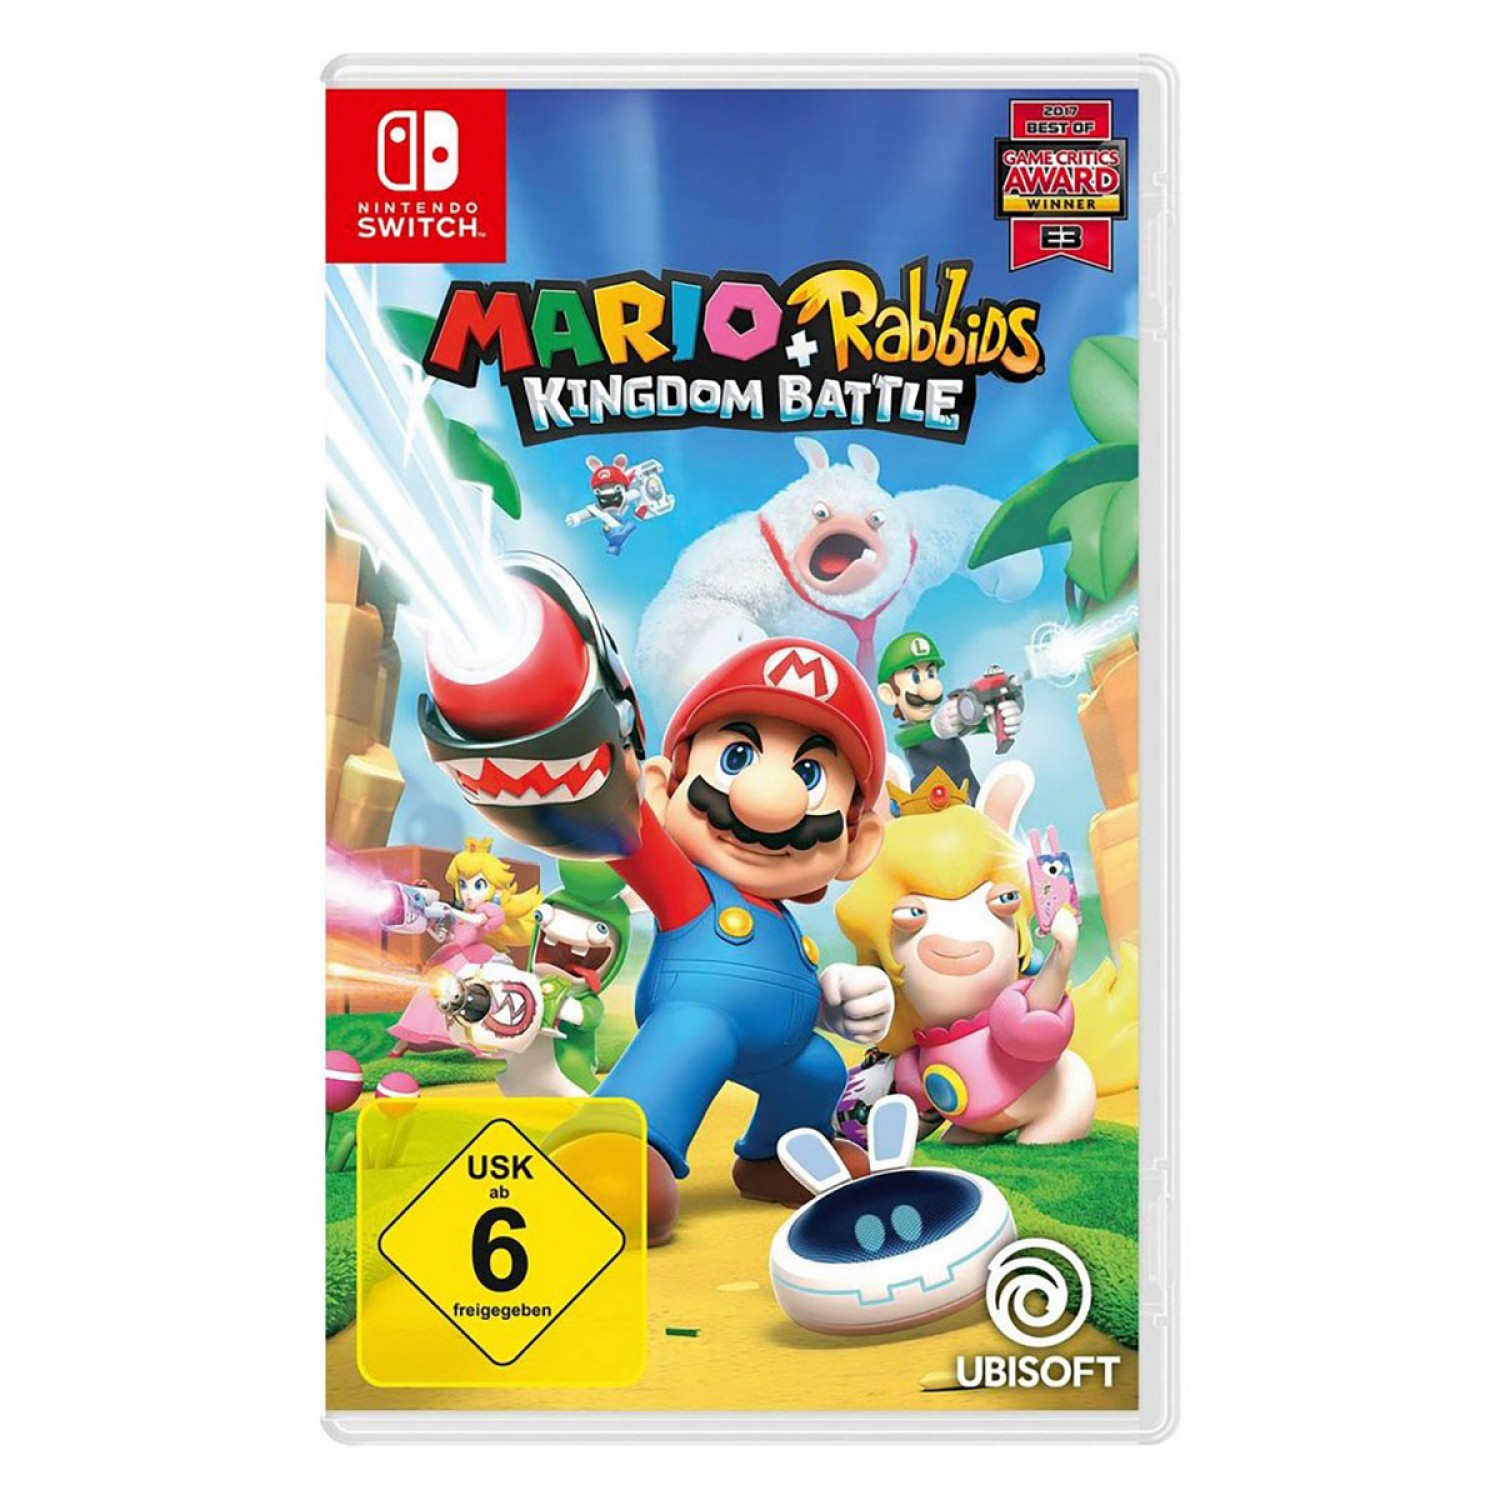 Ø¨Ø§Ø²ÛŒ Mario + Rabbids Kingdom Battle - Nintendo Switch